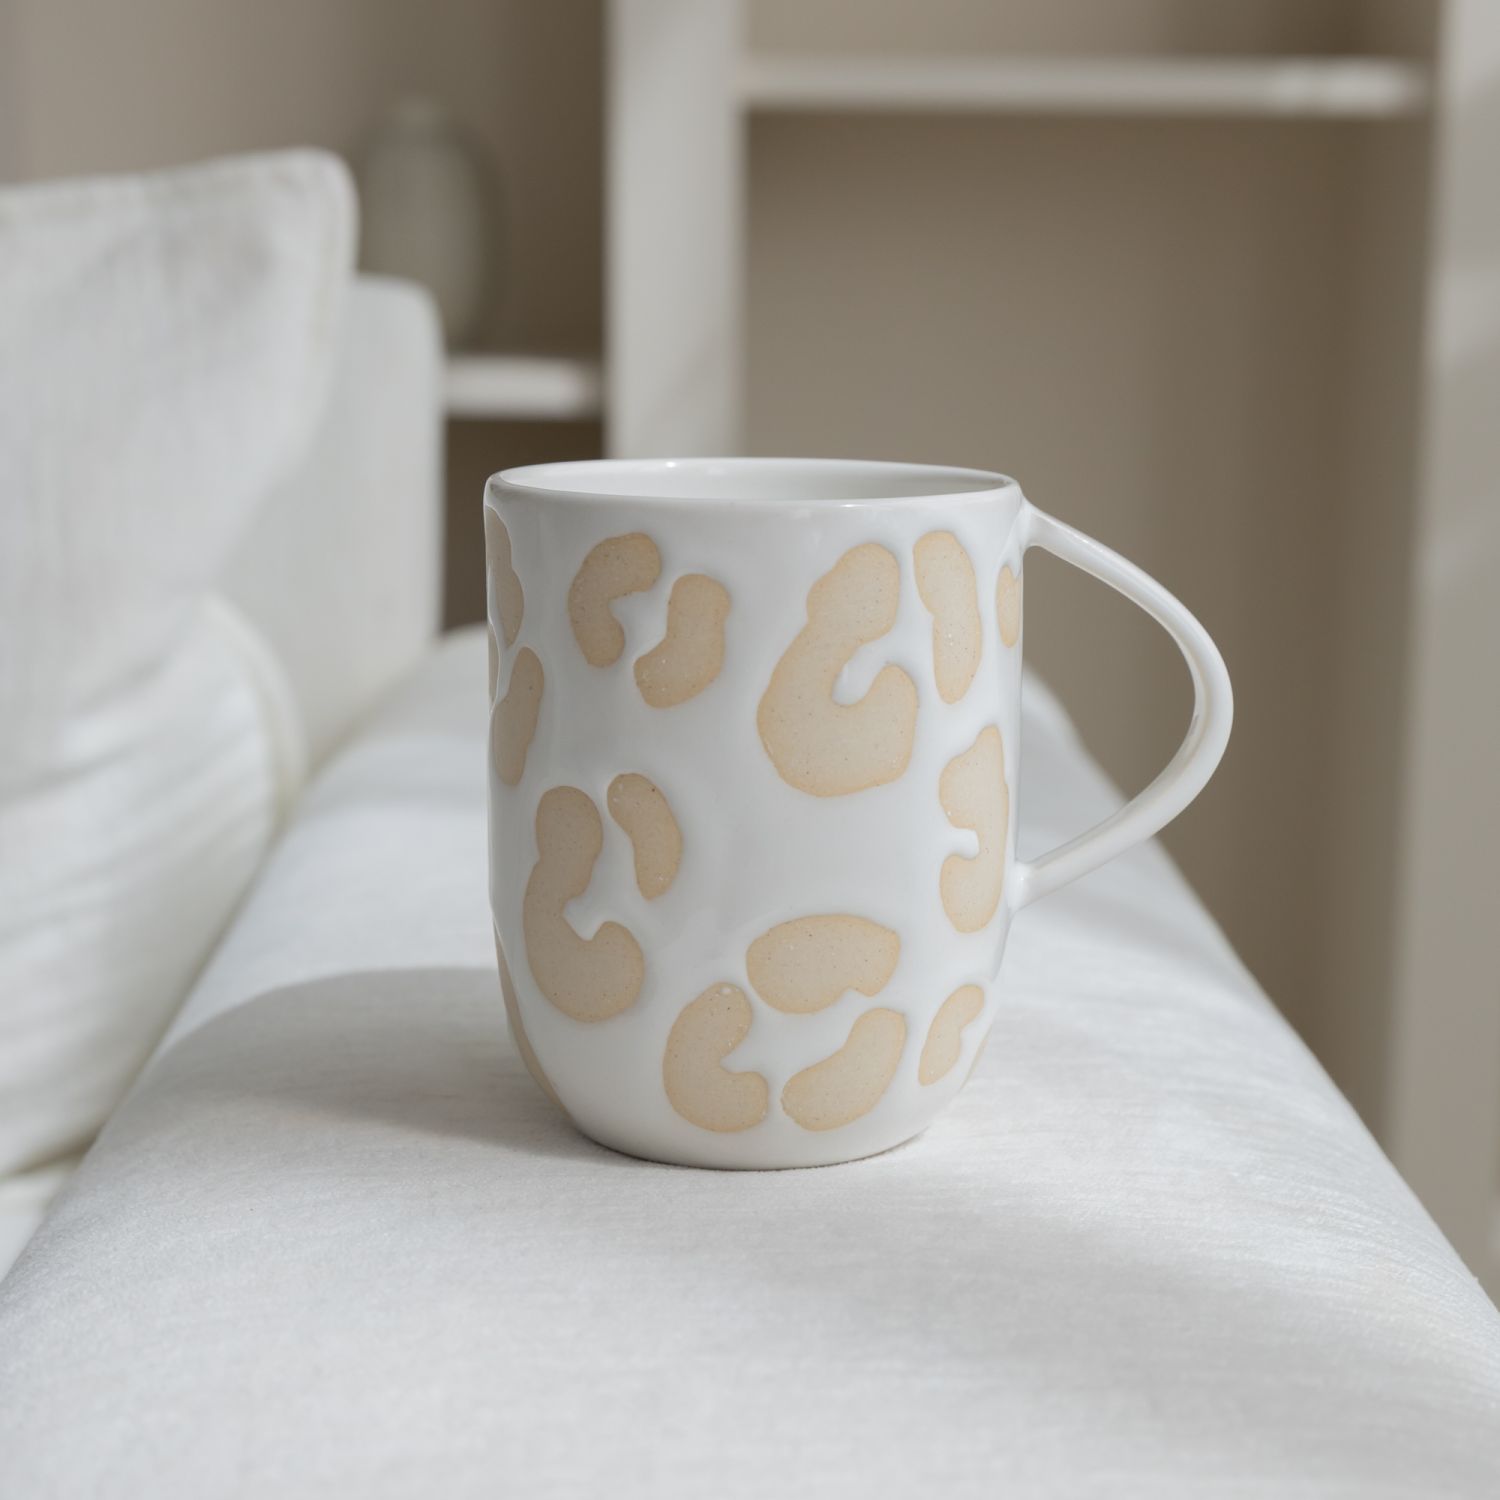 Mima Ceramics: White Print Mug Product Image 1 of 3